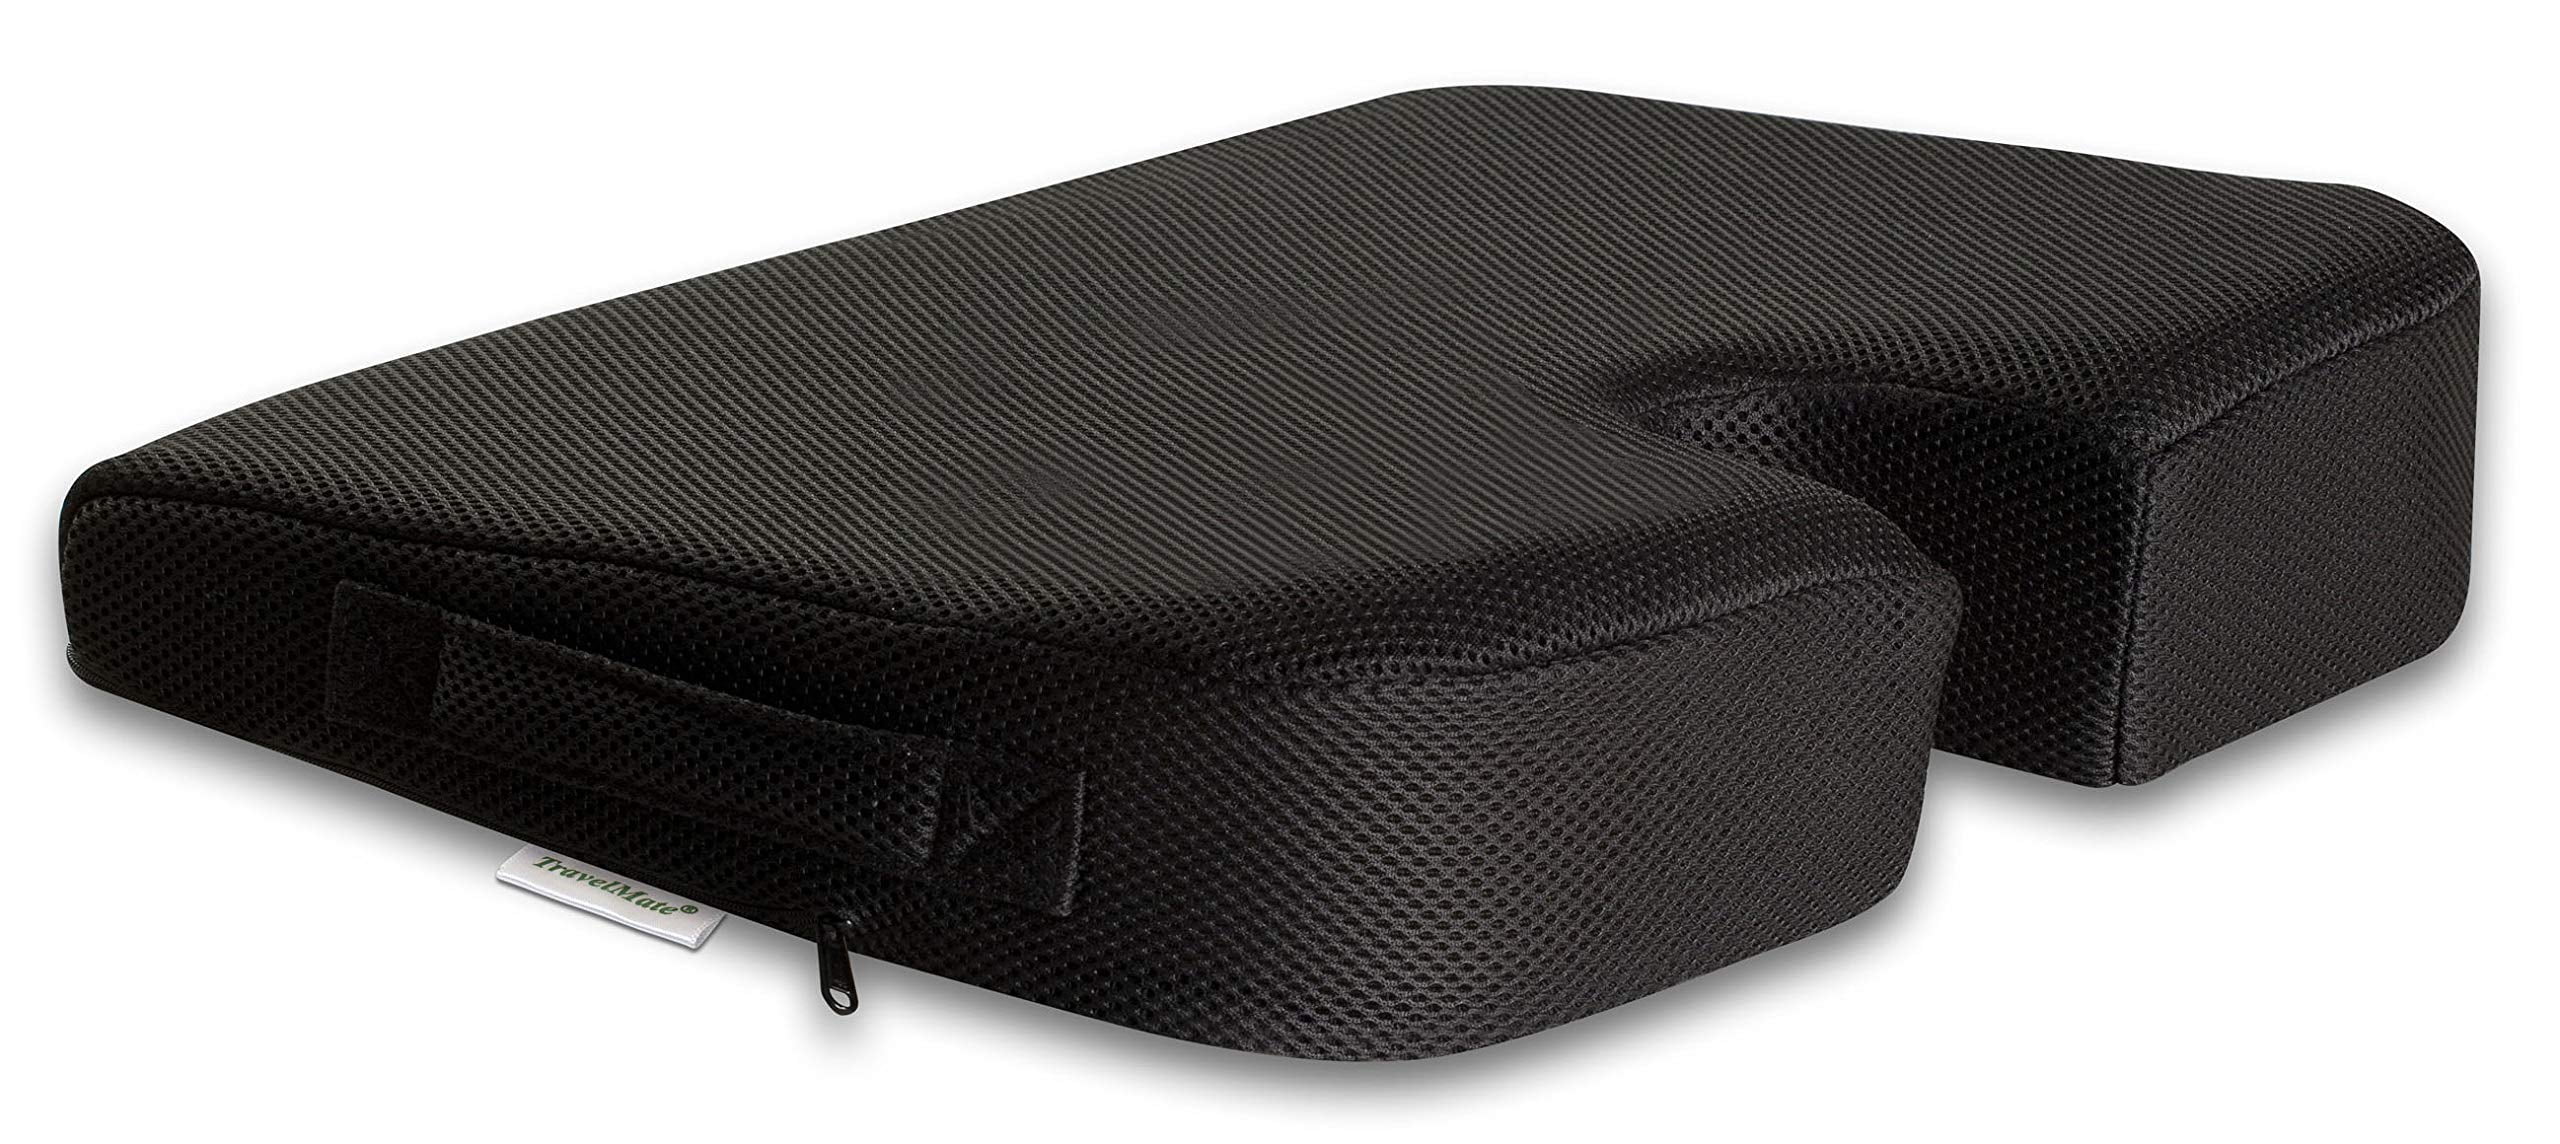  TravelMate Extra-Large Memory Foam Seat Cushion